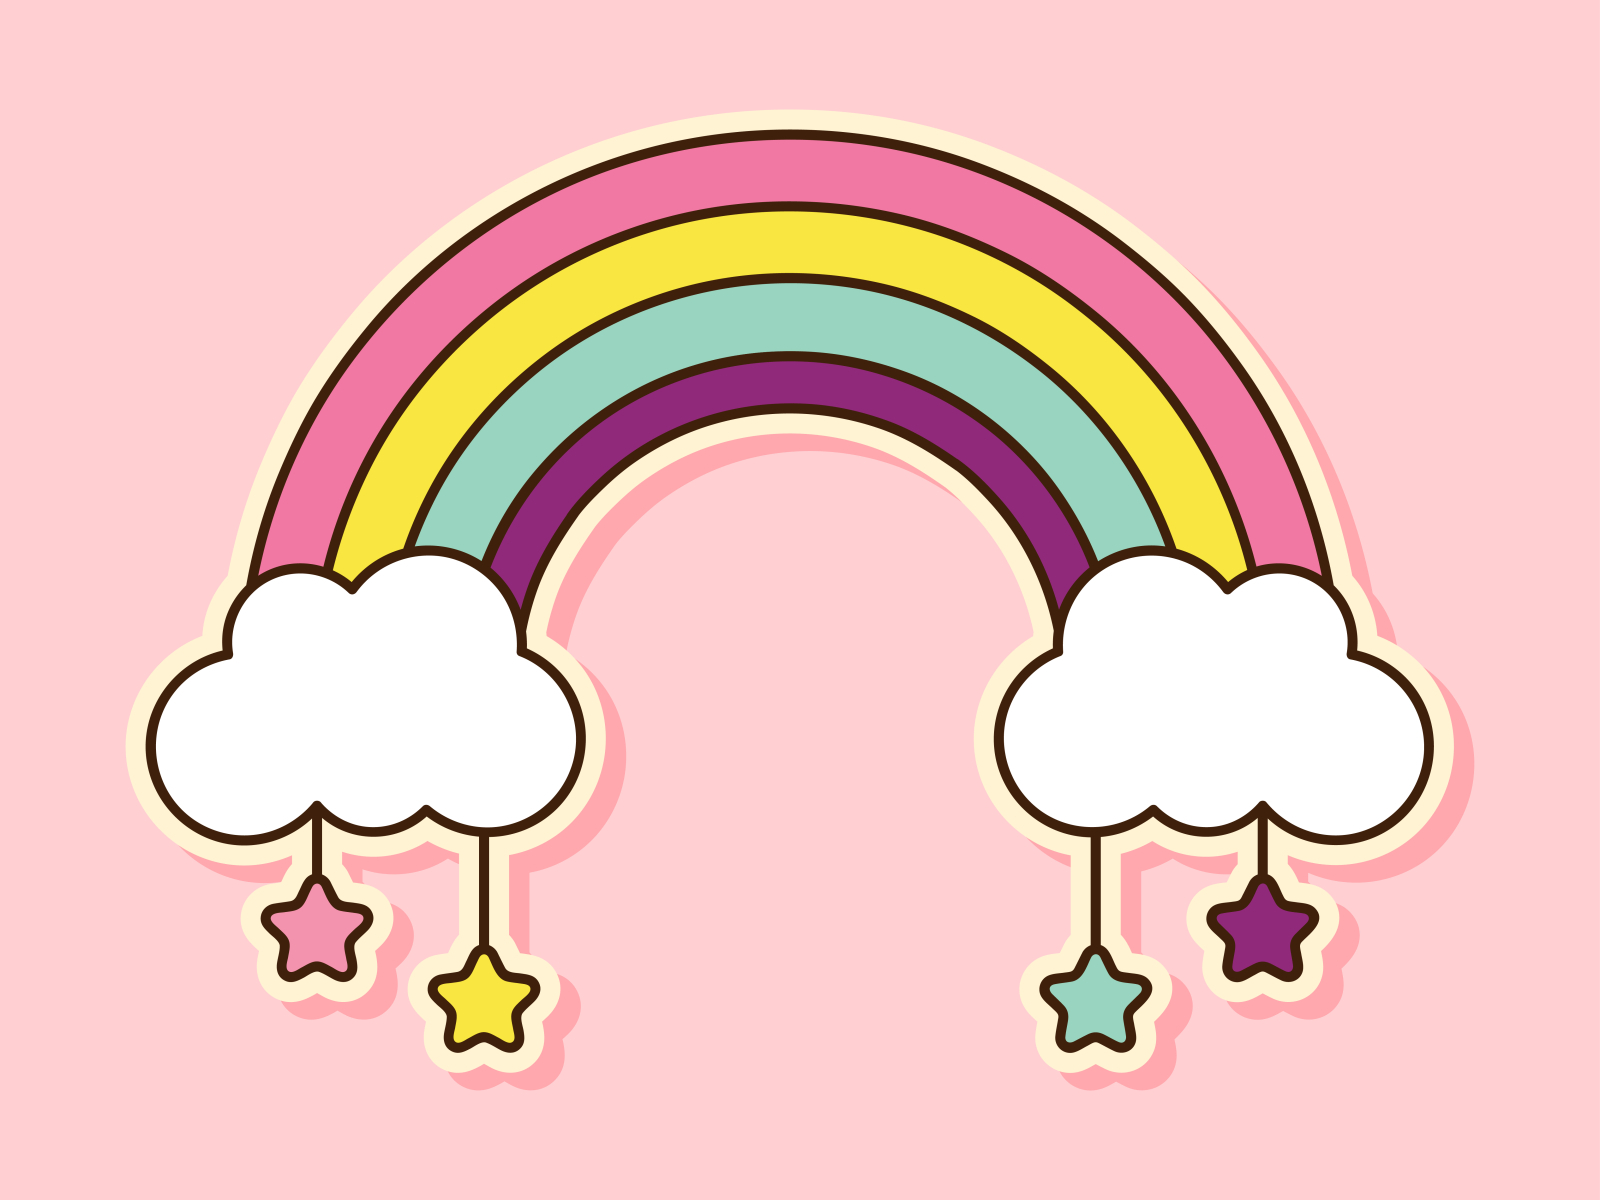 Cute Rainbow Stickers Clipart Graphic by SugarPlum · Creative Fabrica